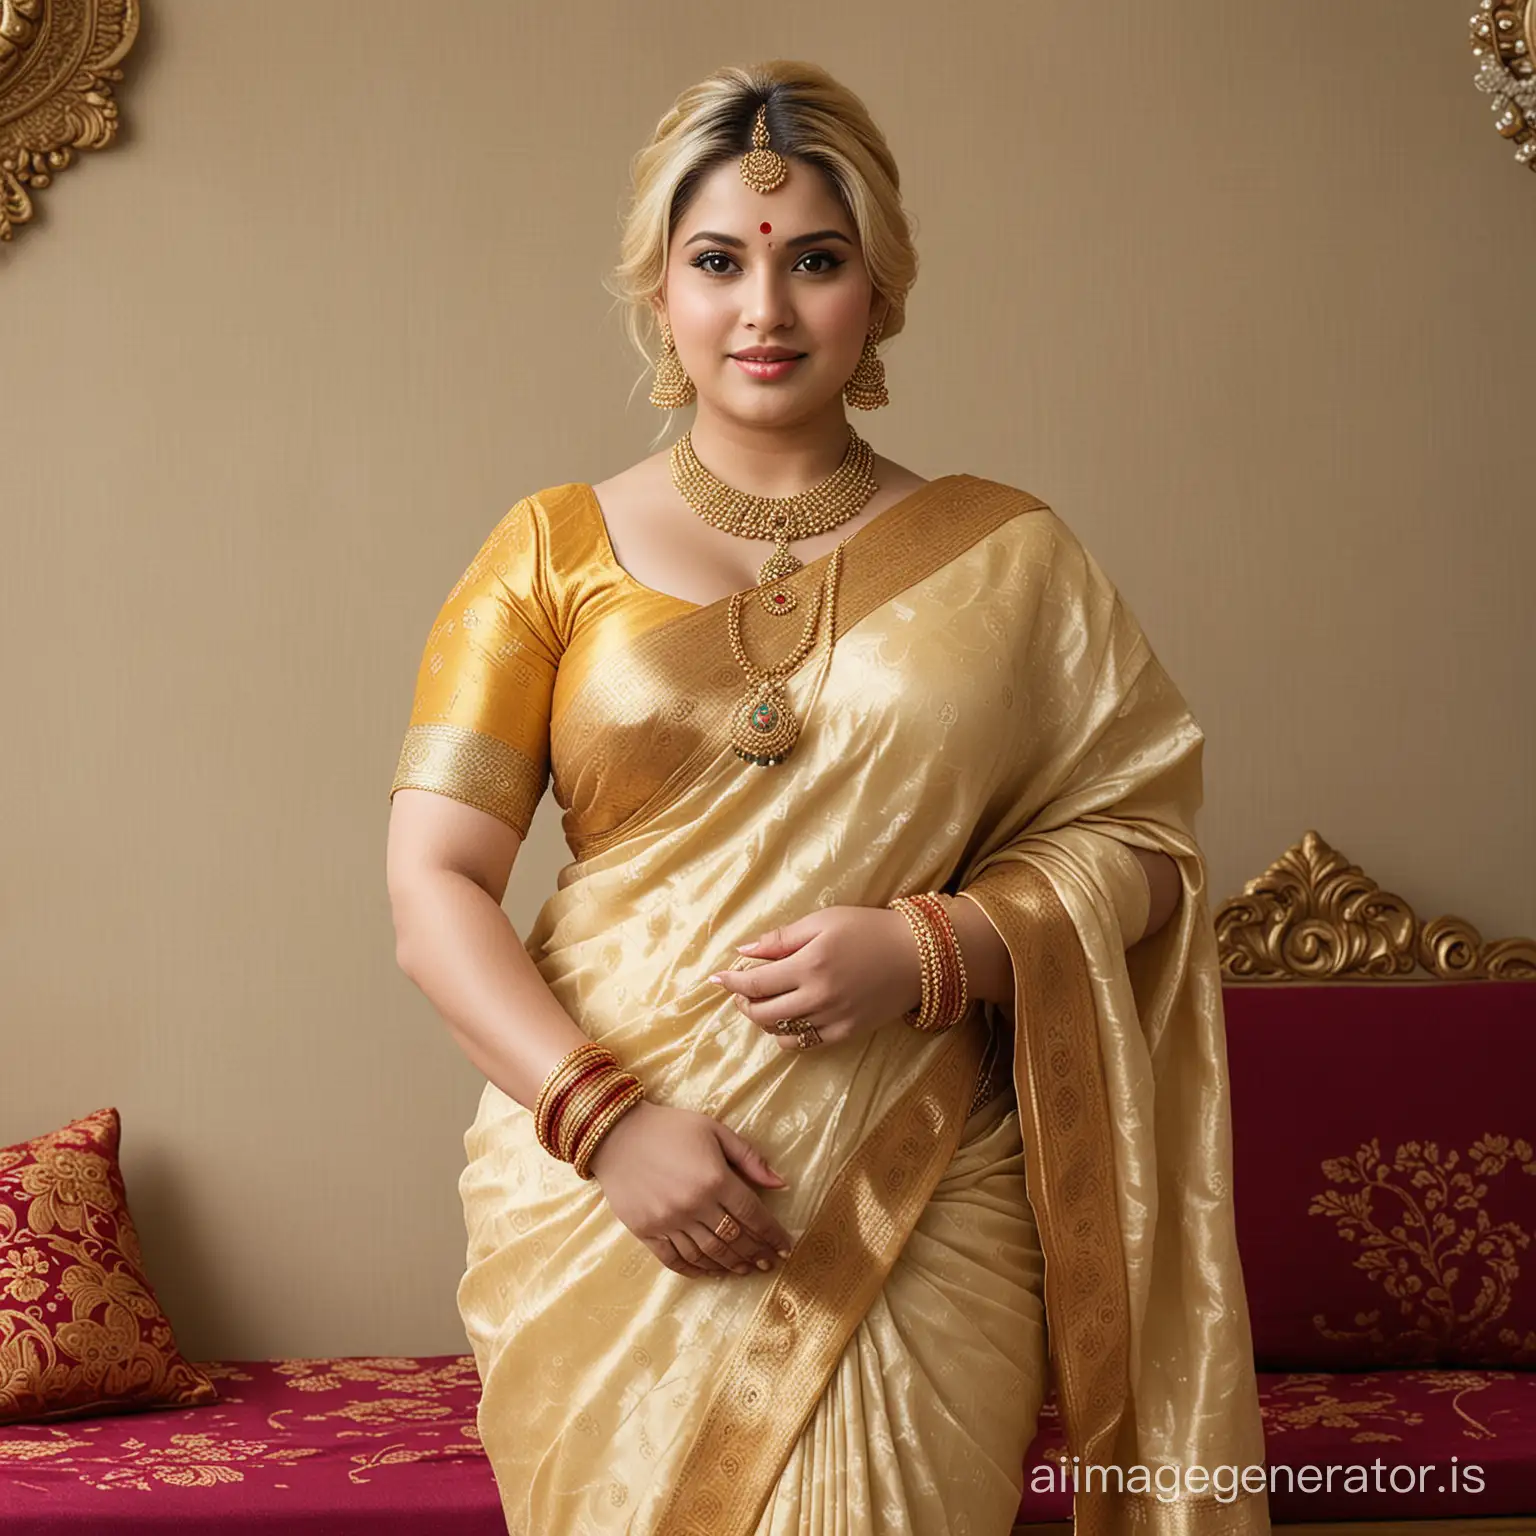 Curvy-American-Bride-in-Traditional-Banarasi-Saree-with-Gold-Jewelry